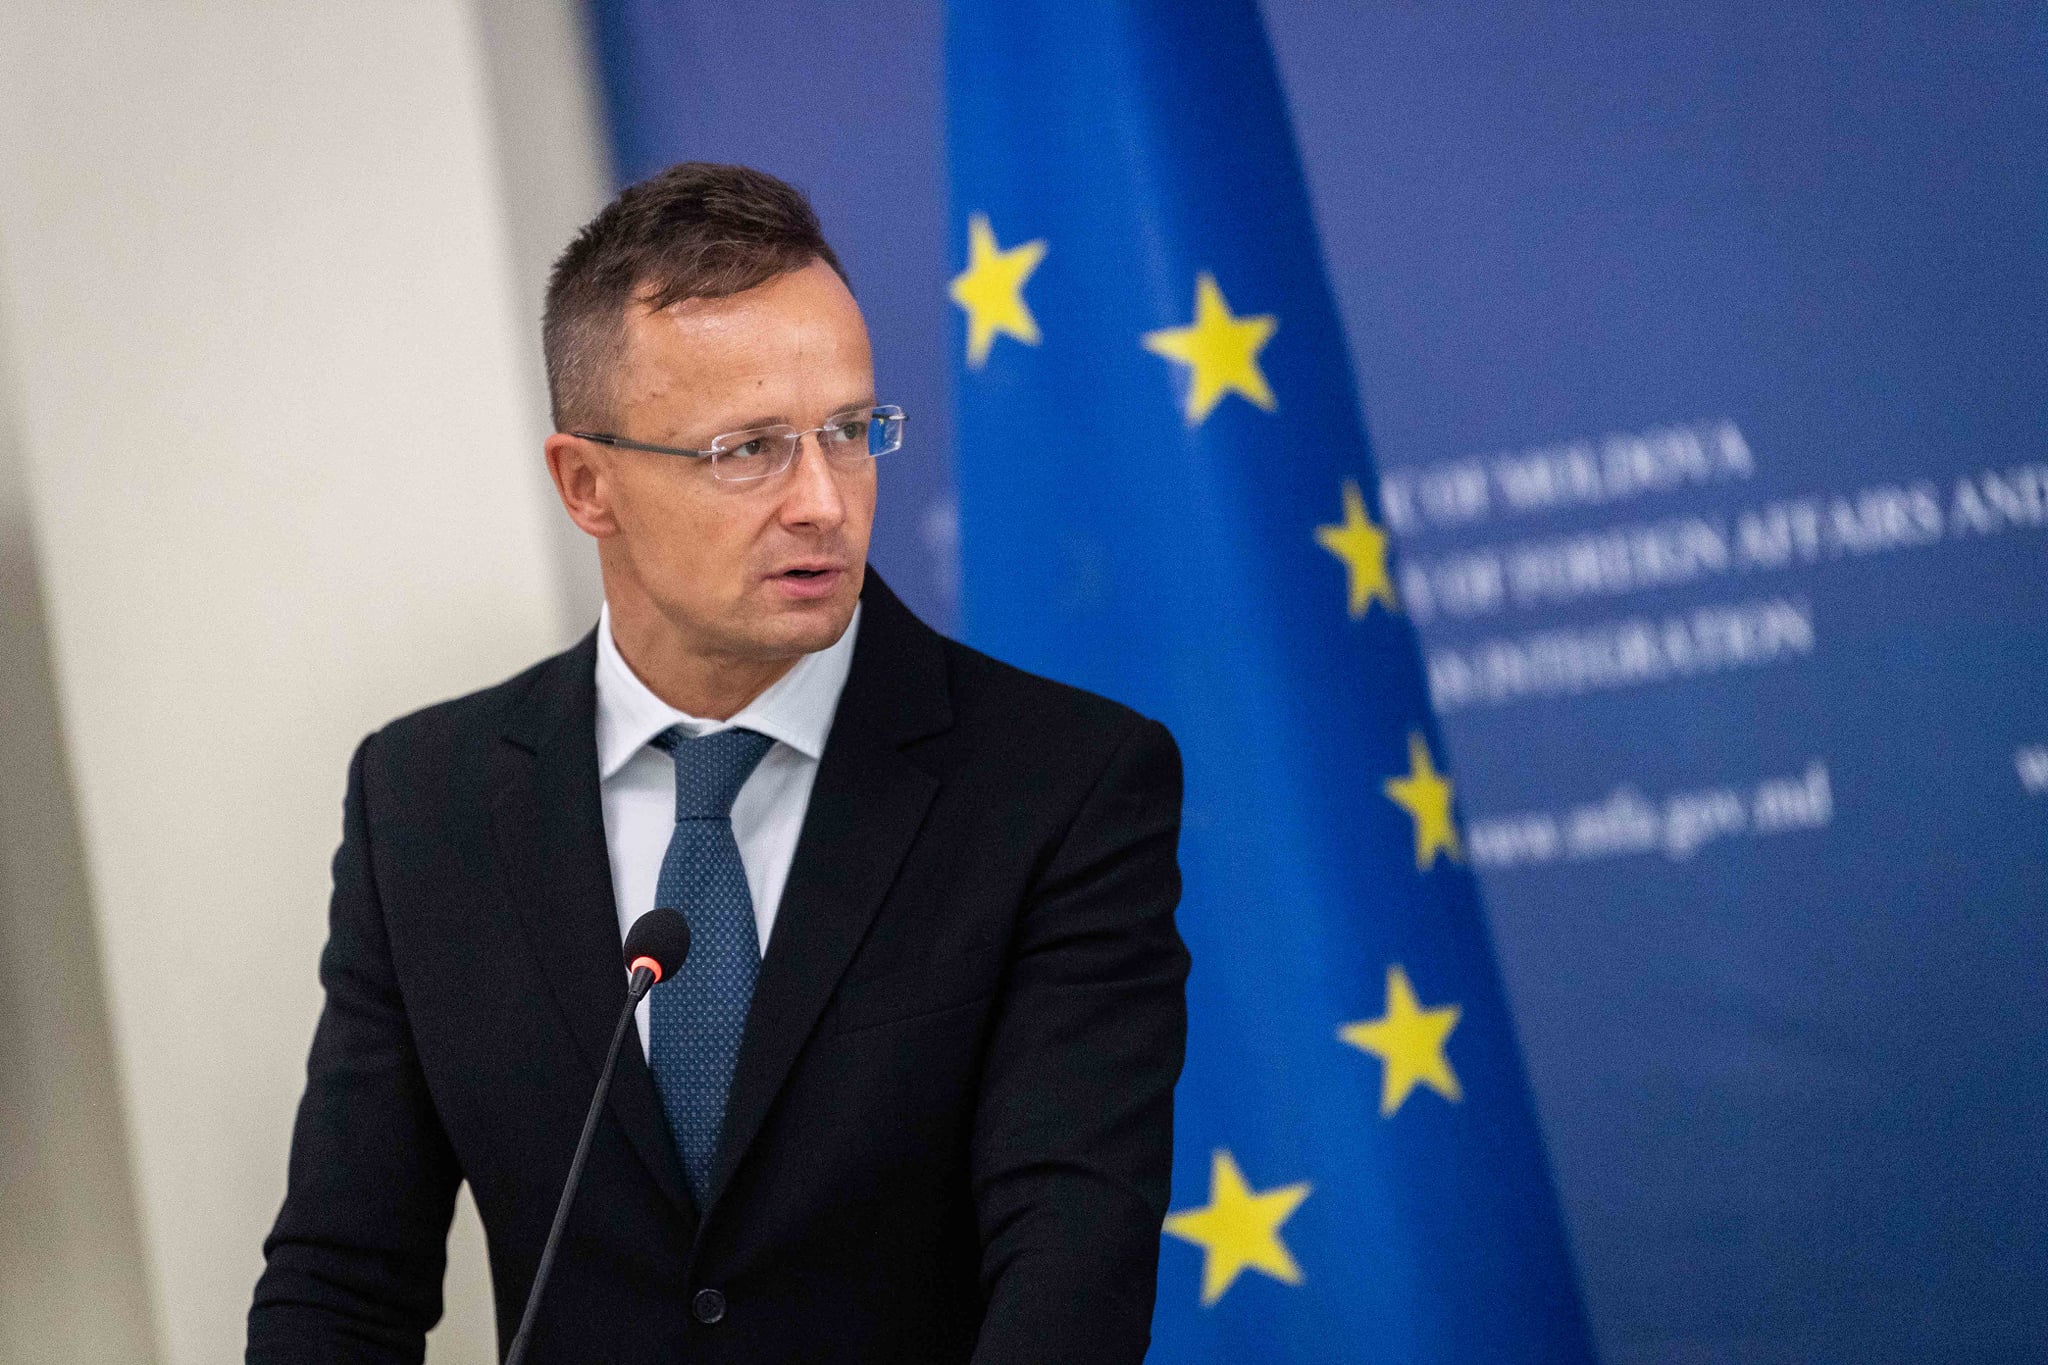 FM Szijjártó: EC Position on Migration 'Bizarre and Shameful'